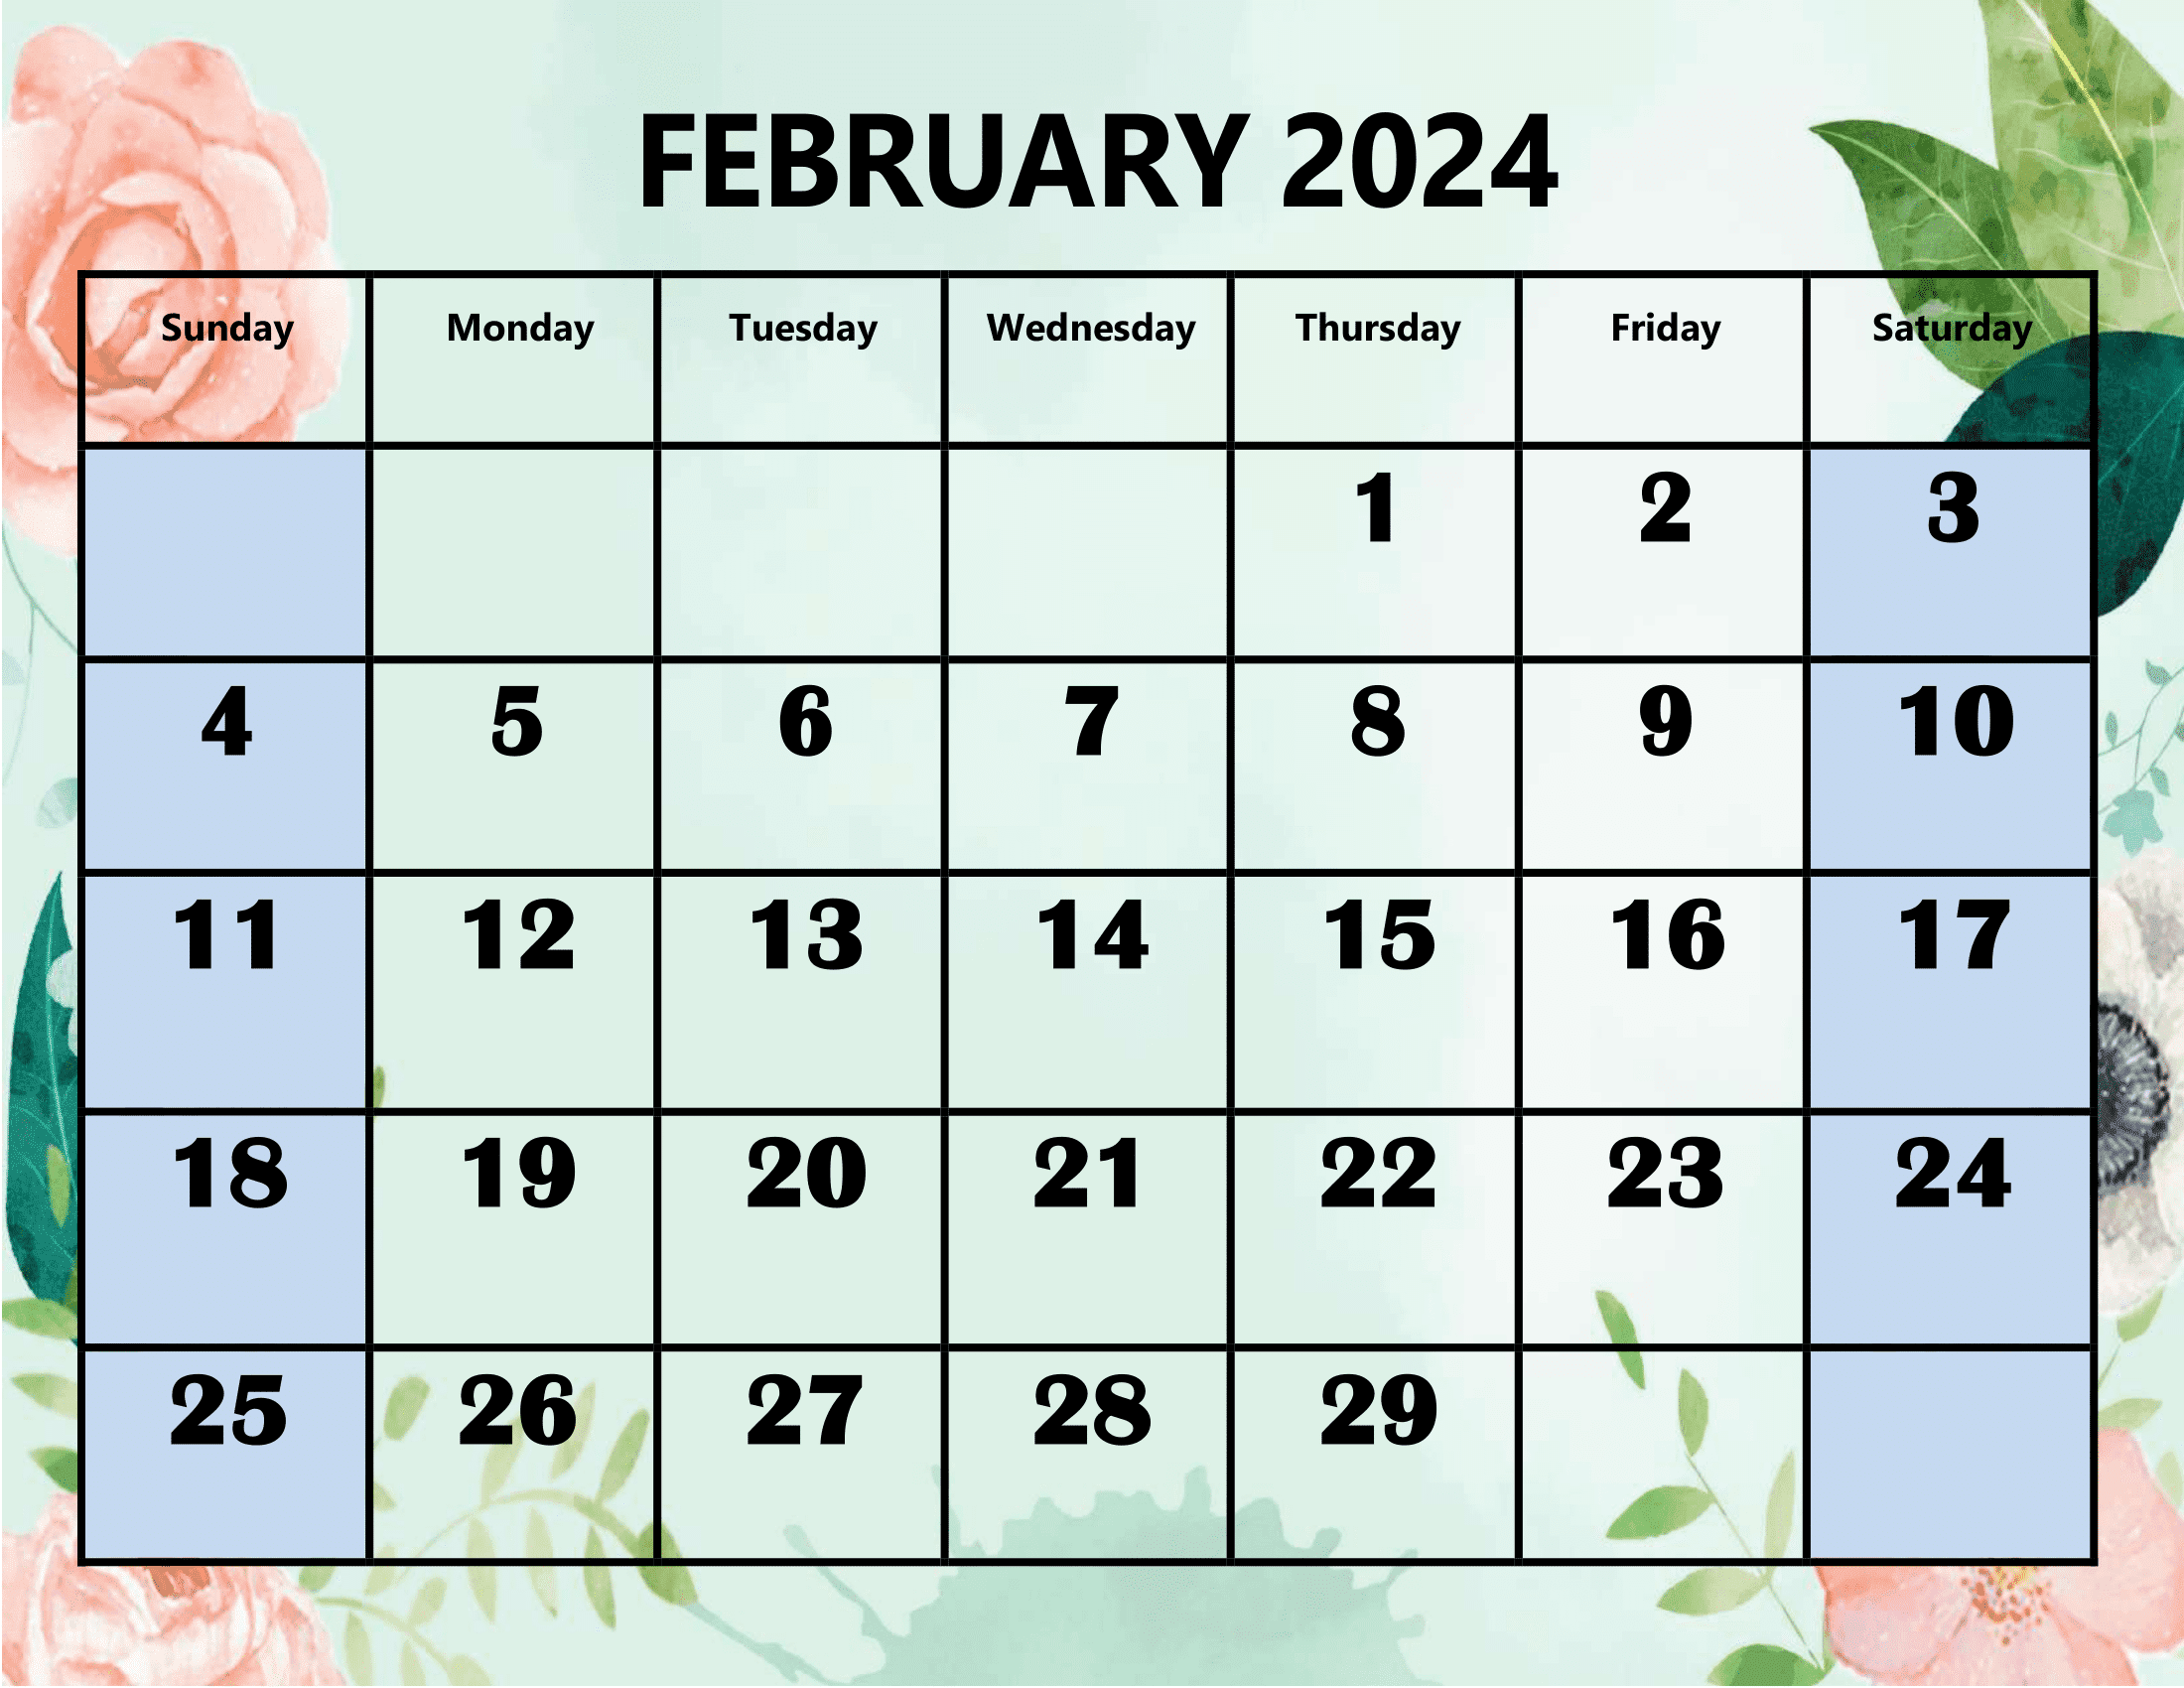 Tamil Calendar 2024 February Becki Carolan